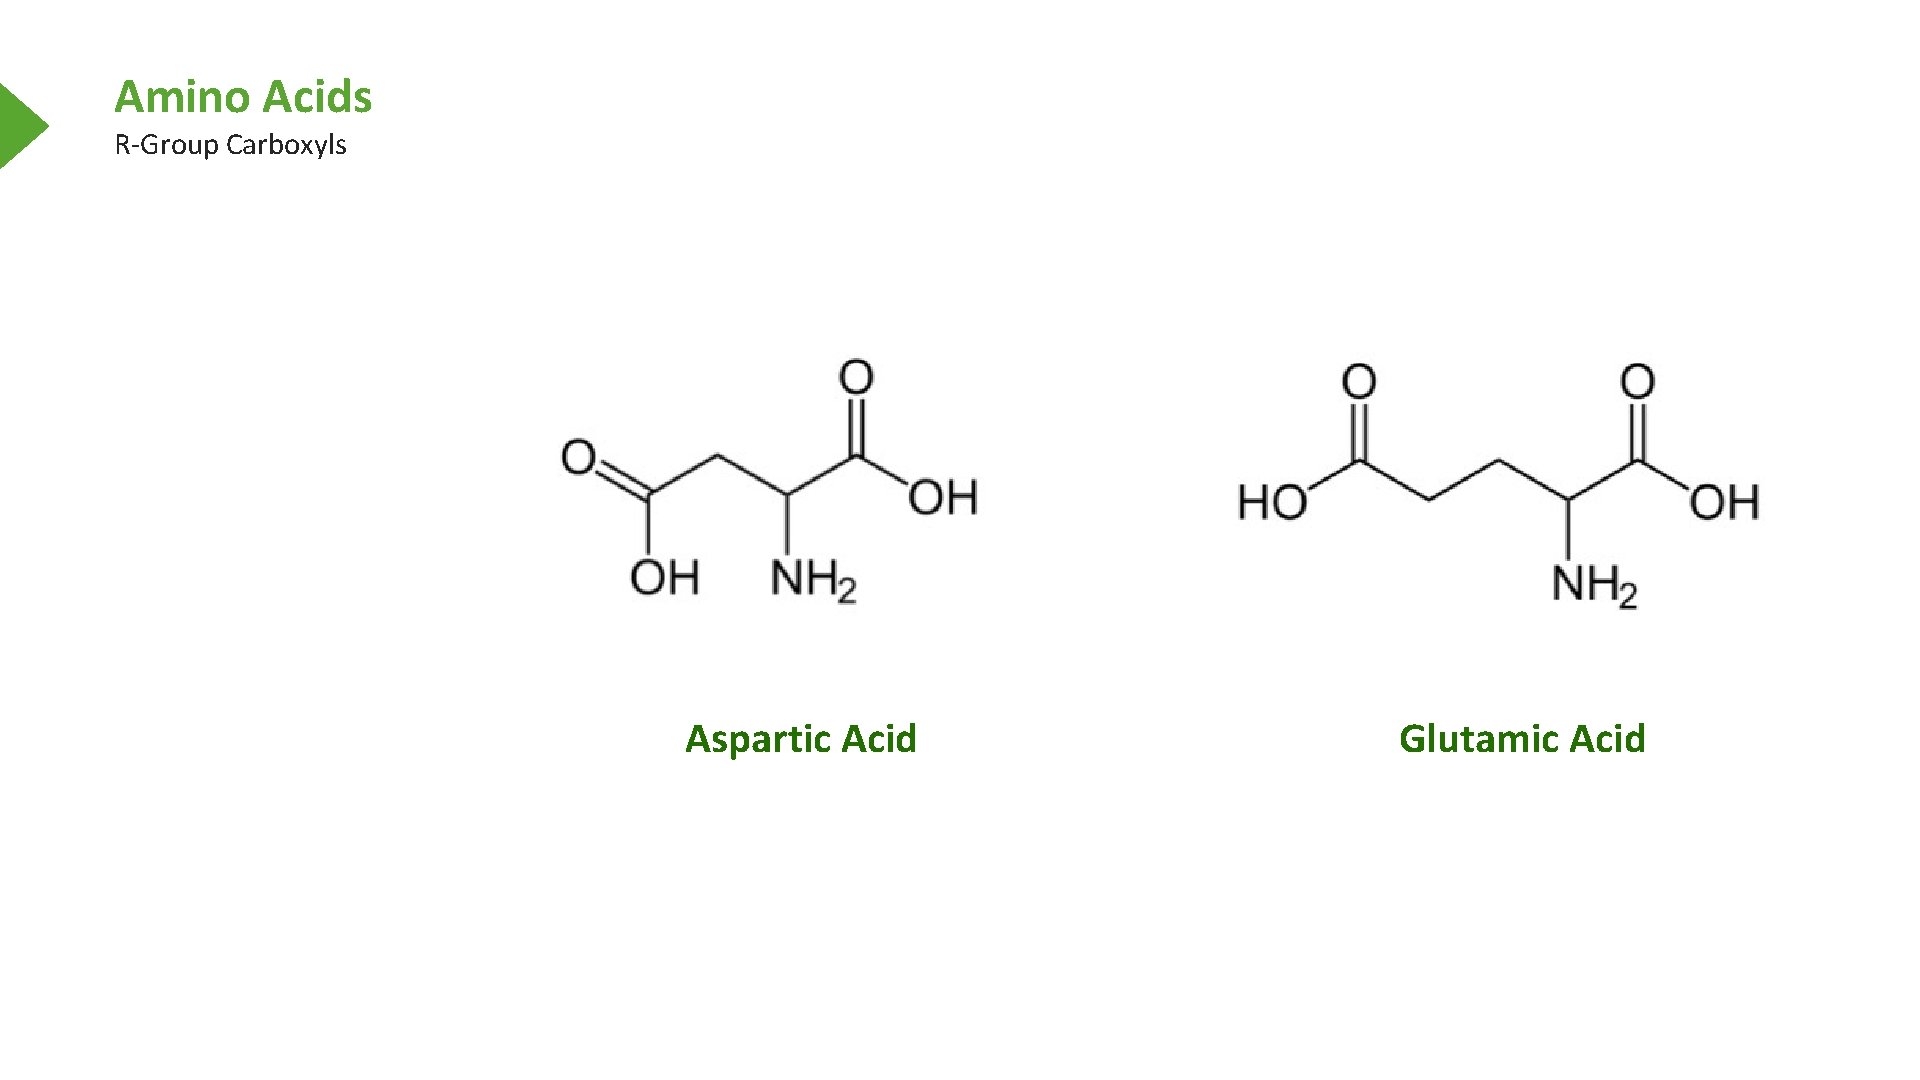 Amino Acids R-Group Carboxyls Aspartic Acid Glutamic Acid 